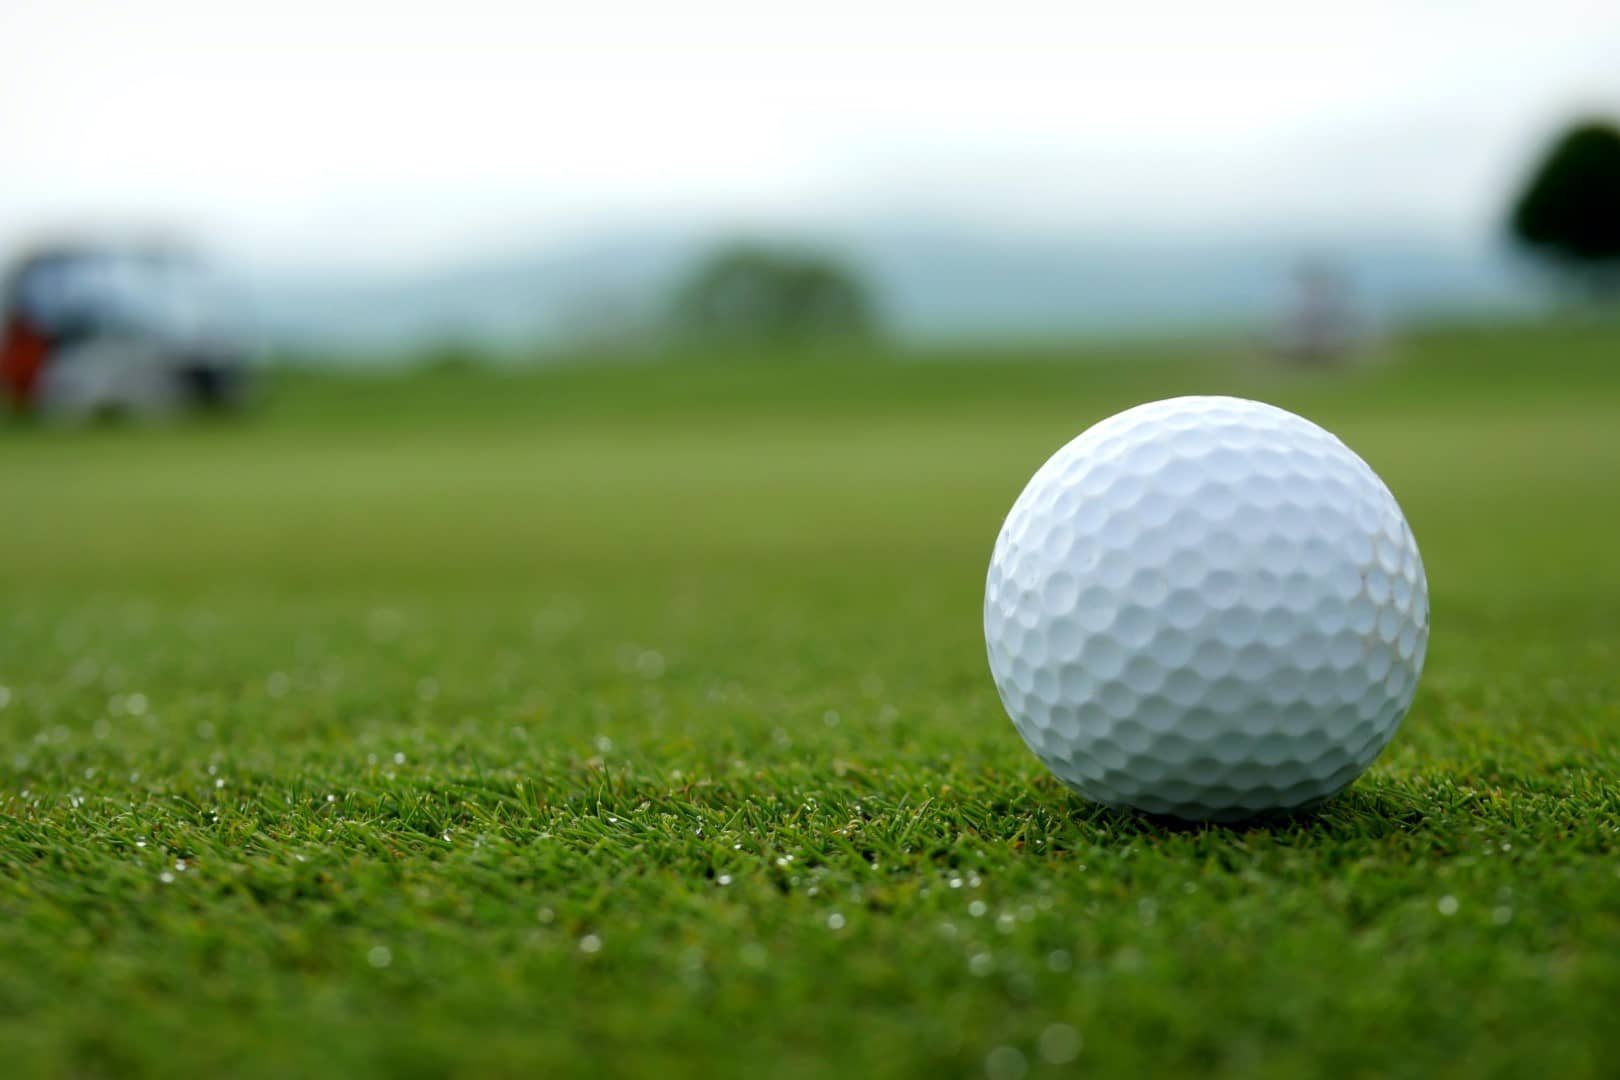 A close photograph of a golf ball on the green grass.